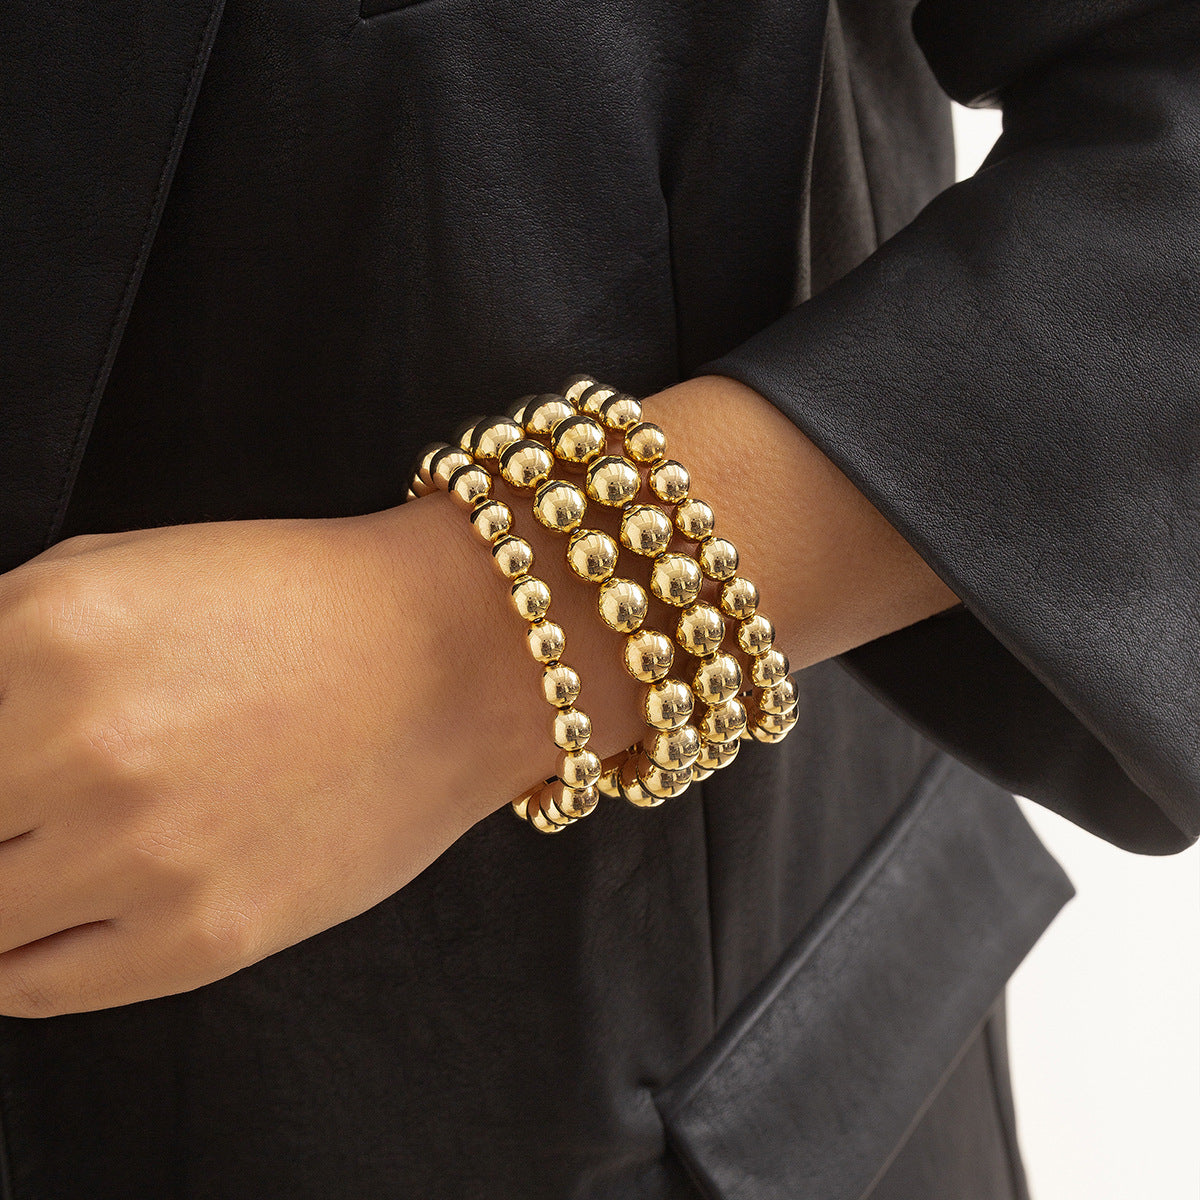 Fashion 4-layered bracelet by simple geometric resin balls